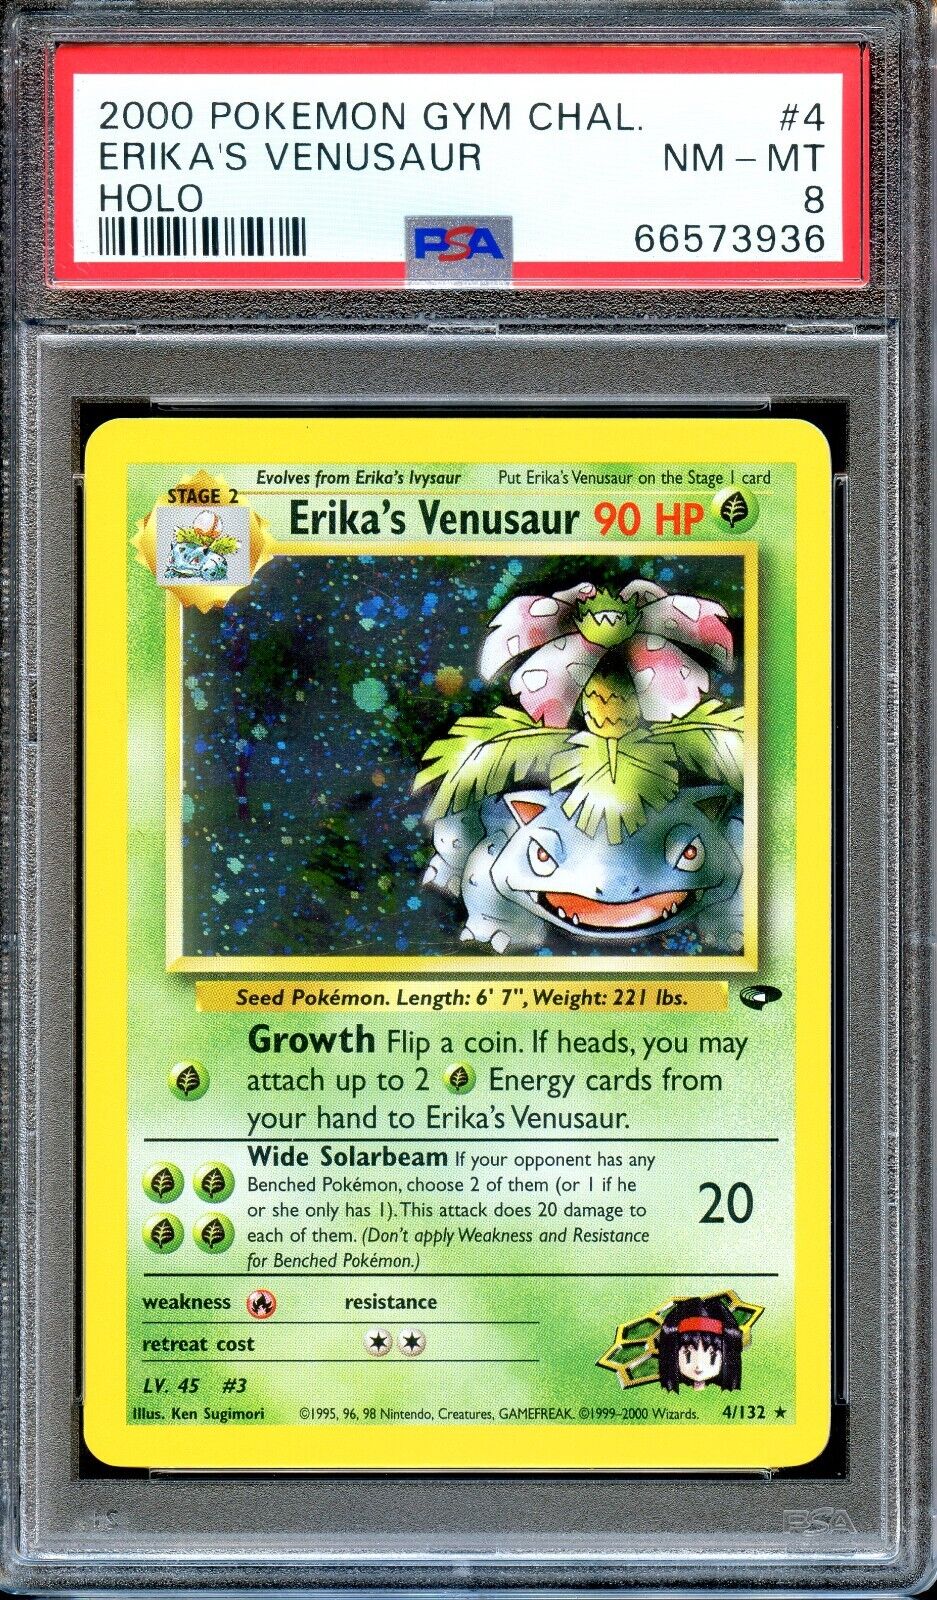 PSA 8 Erika's Venusaur 4/132 Gym Challenge Unlimited Pokemon Card NEAR MINT Holo